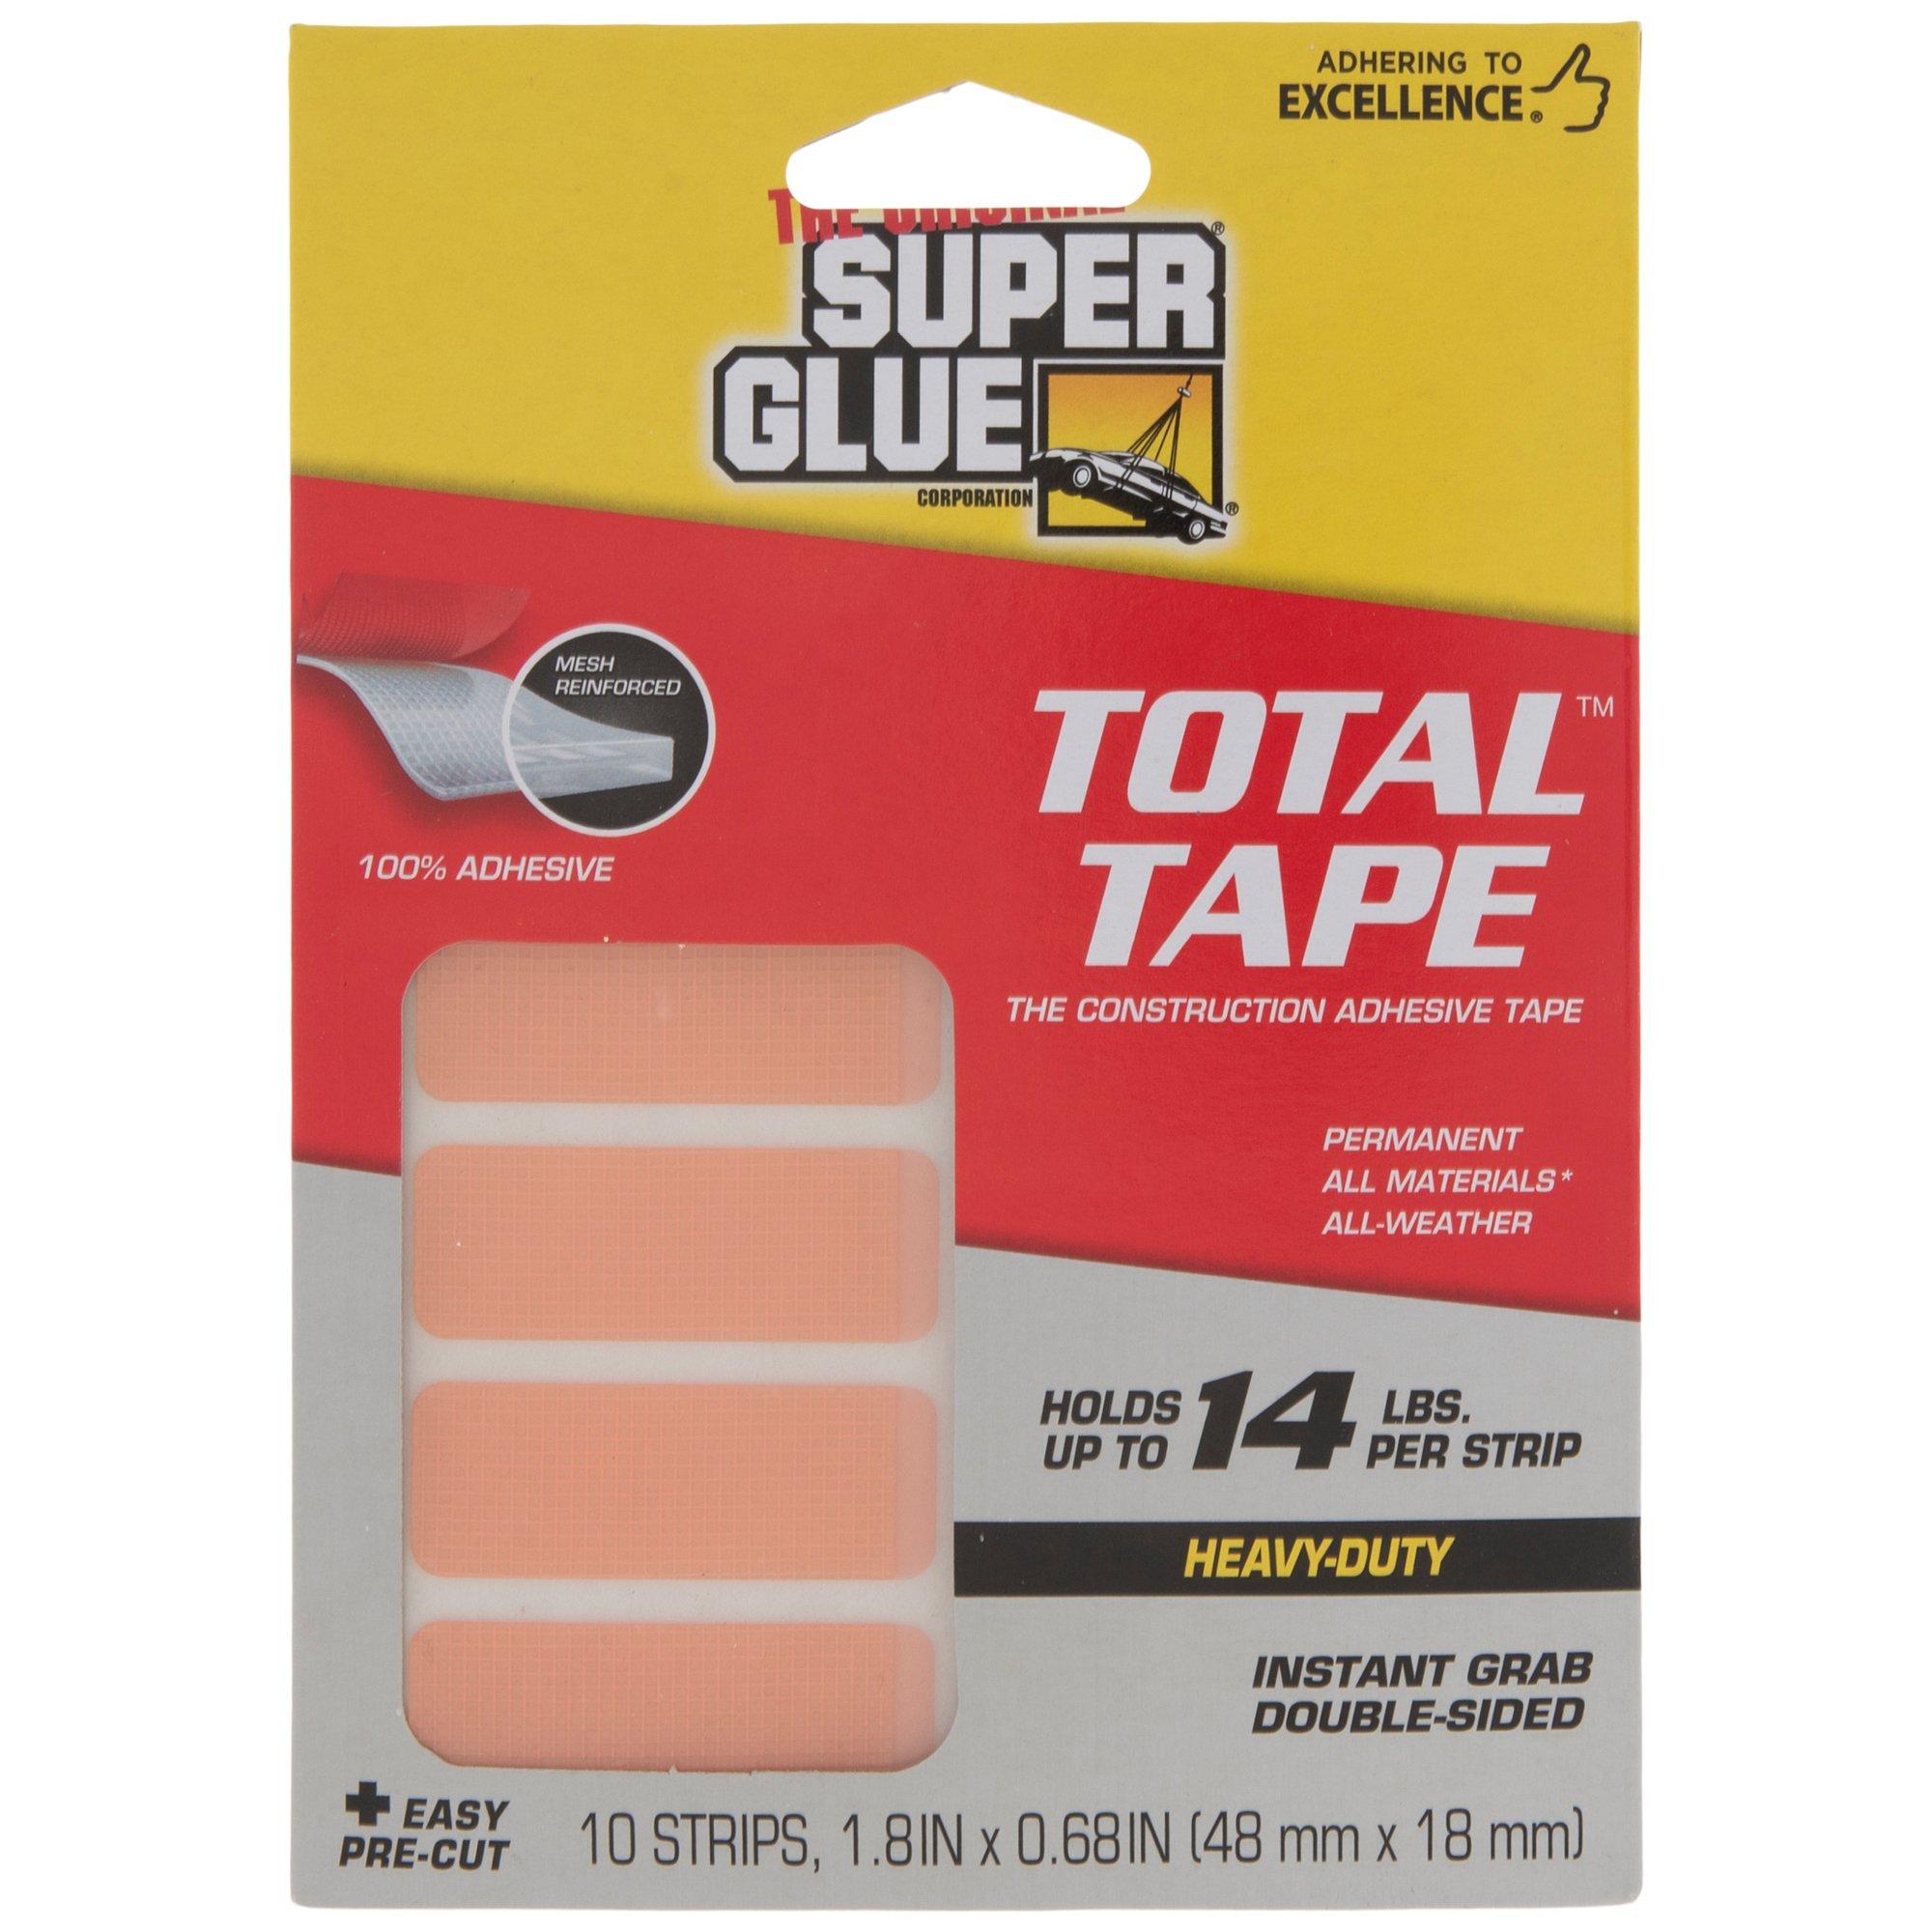 Wholesale & Bulk Glue, Tape, & Adhesives - Fun Express